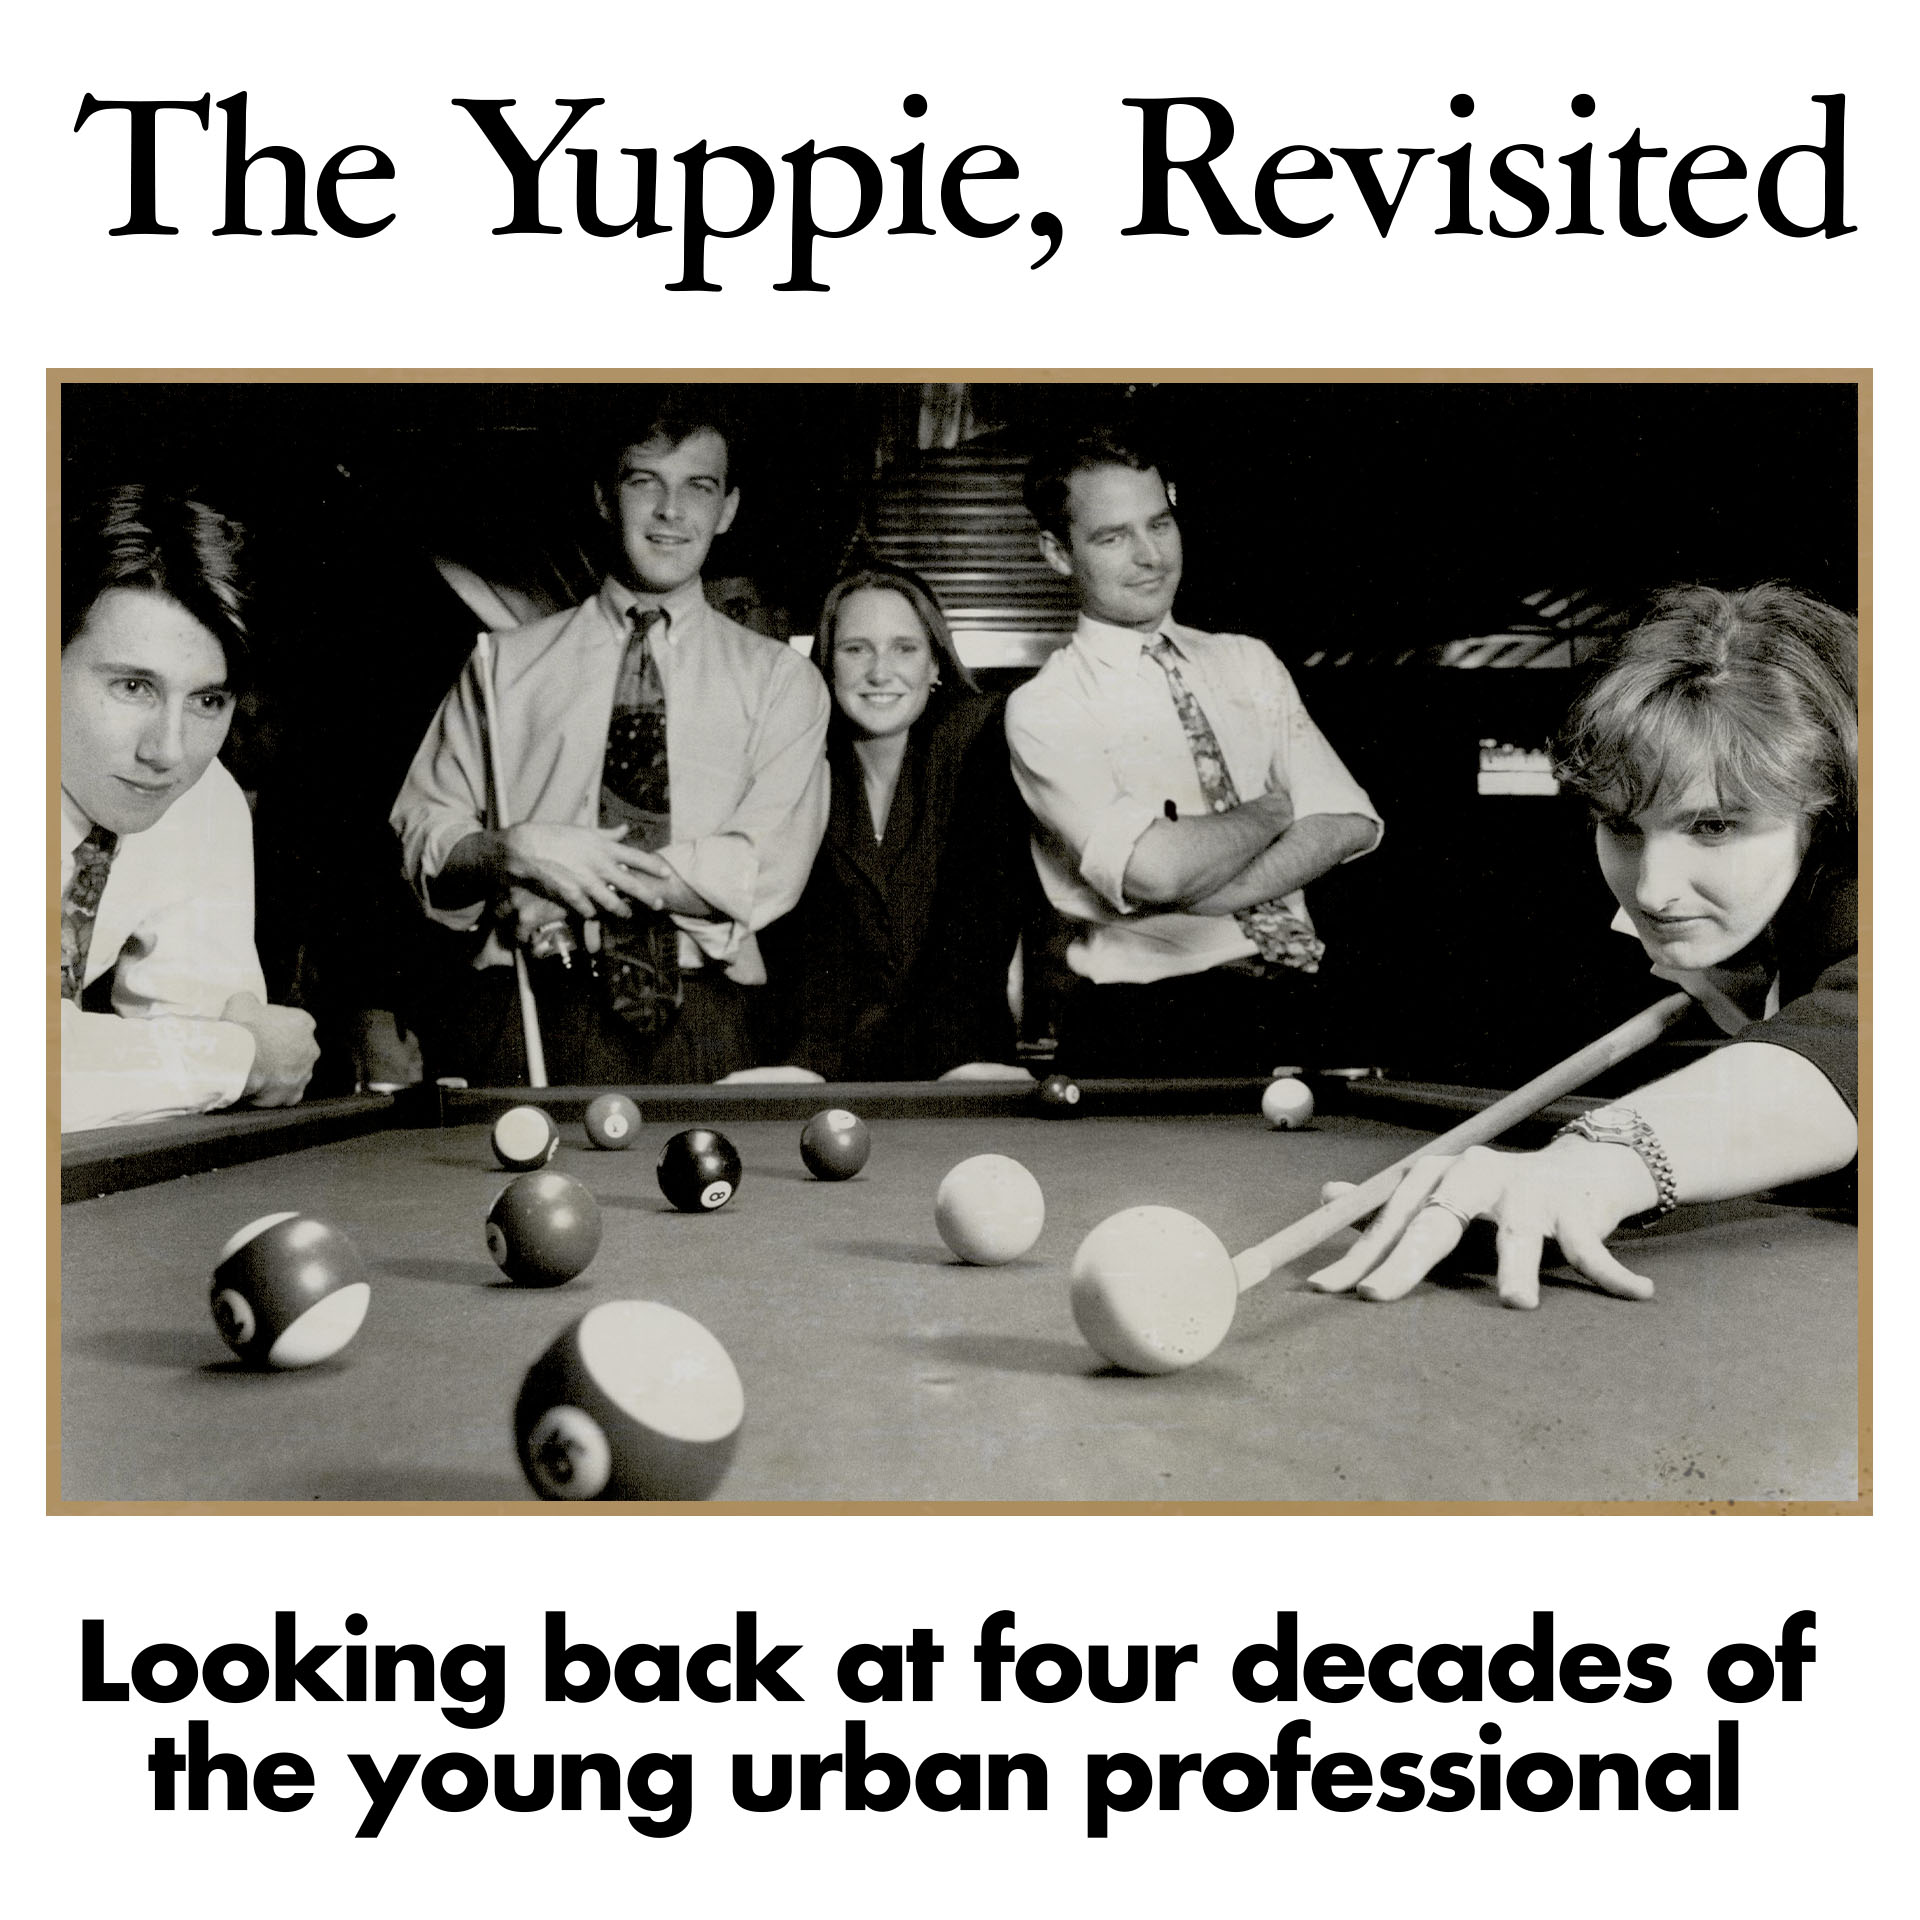 the yuppie handbook 1984